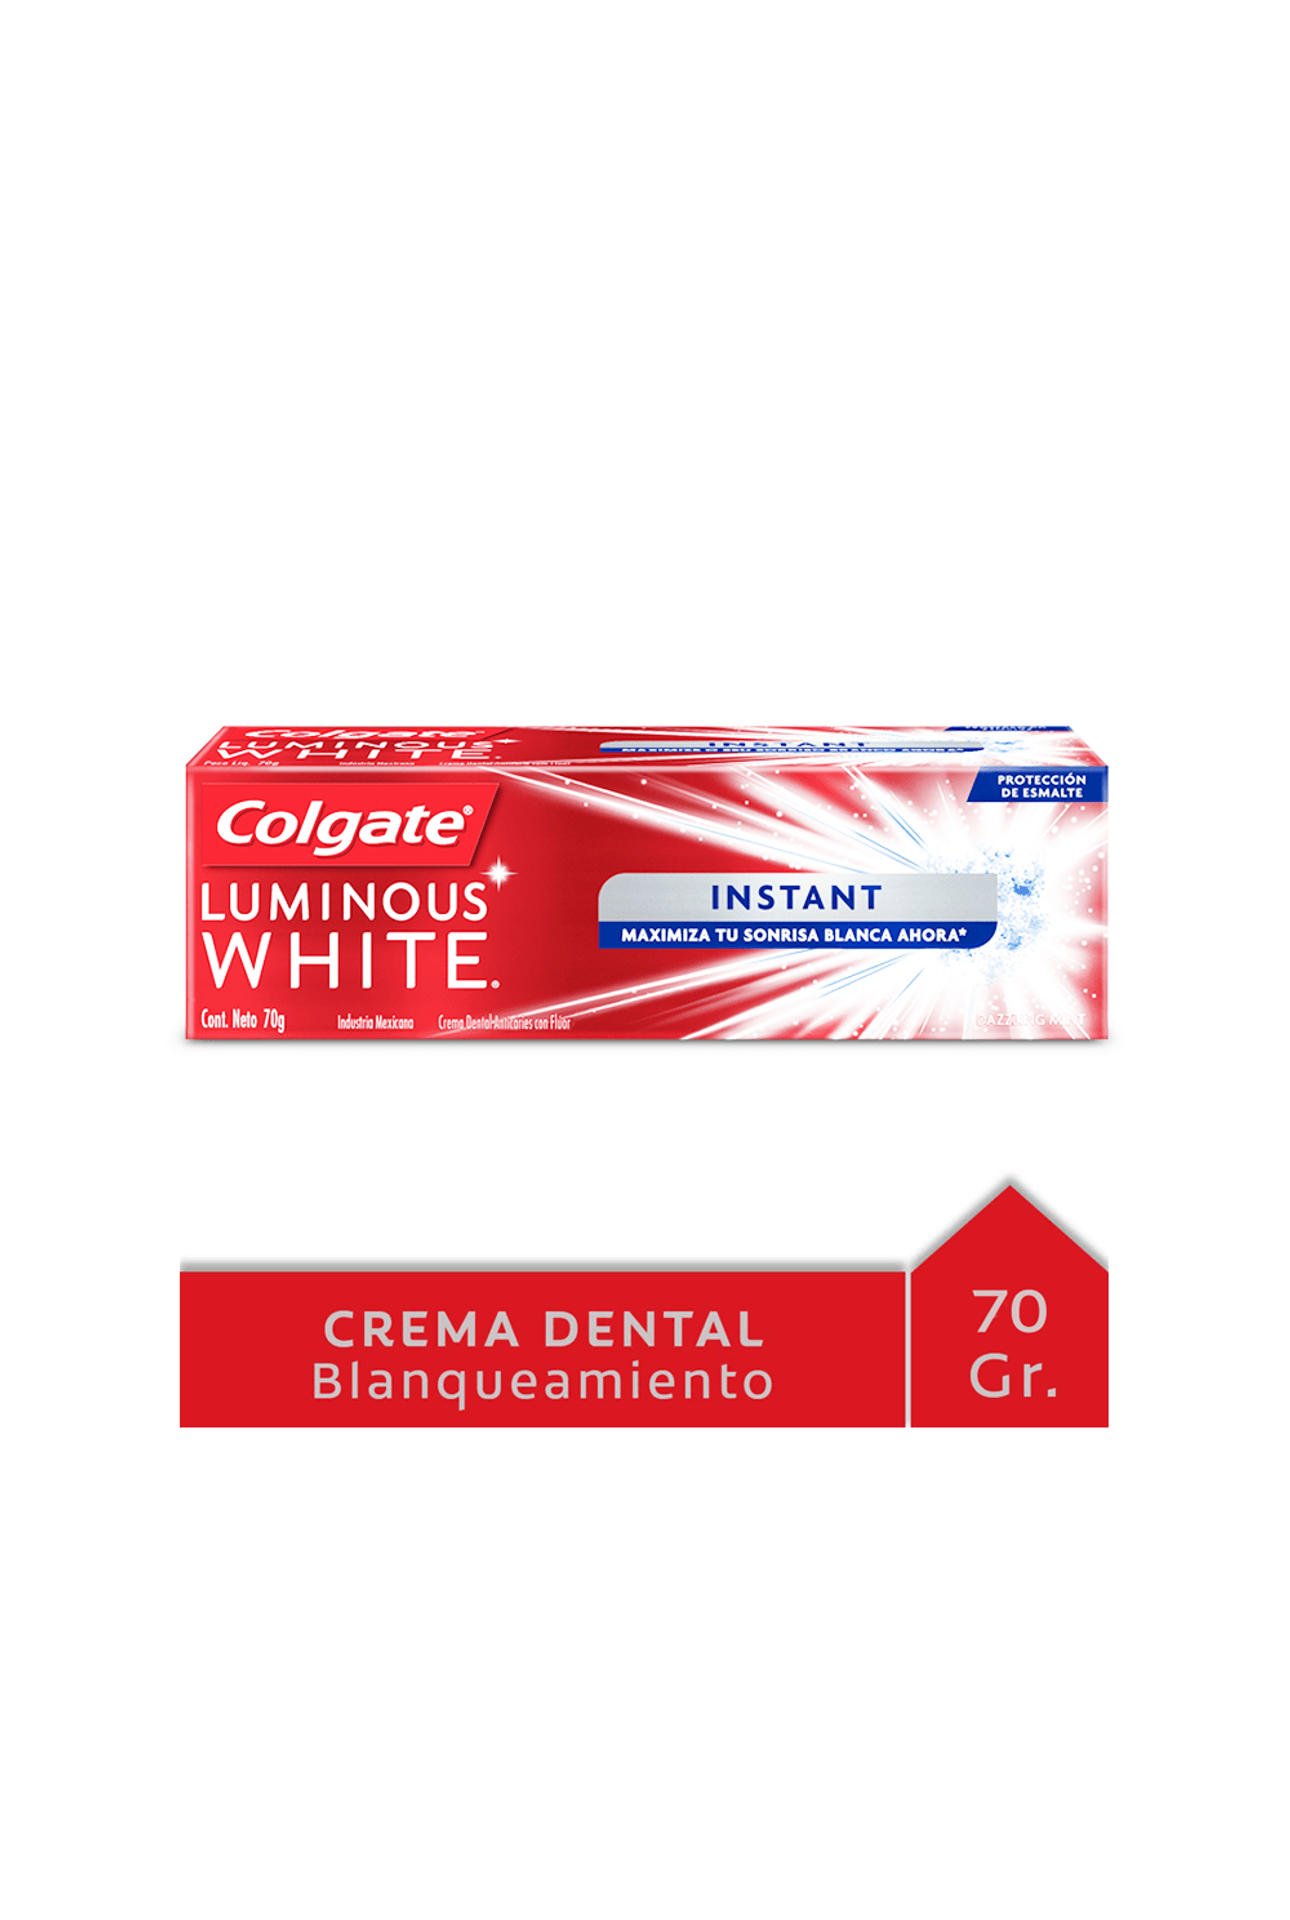 2112443_Colgate-Crema-Dental-Colgate-Luminous-White-Instant-x-70gr_img1